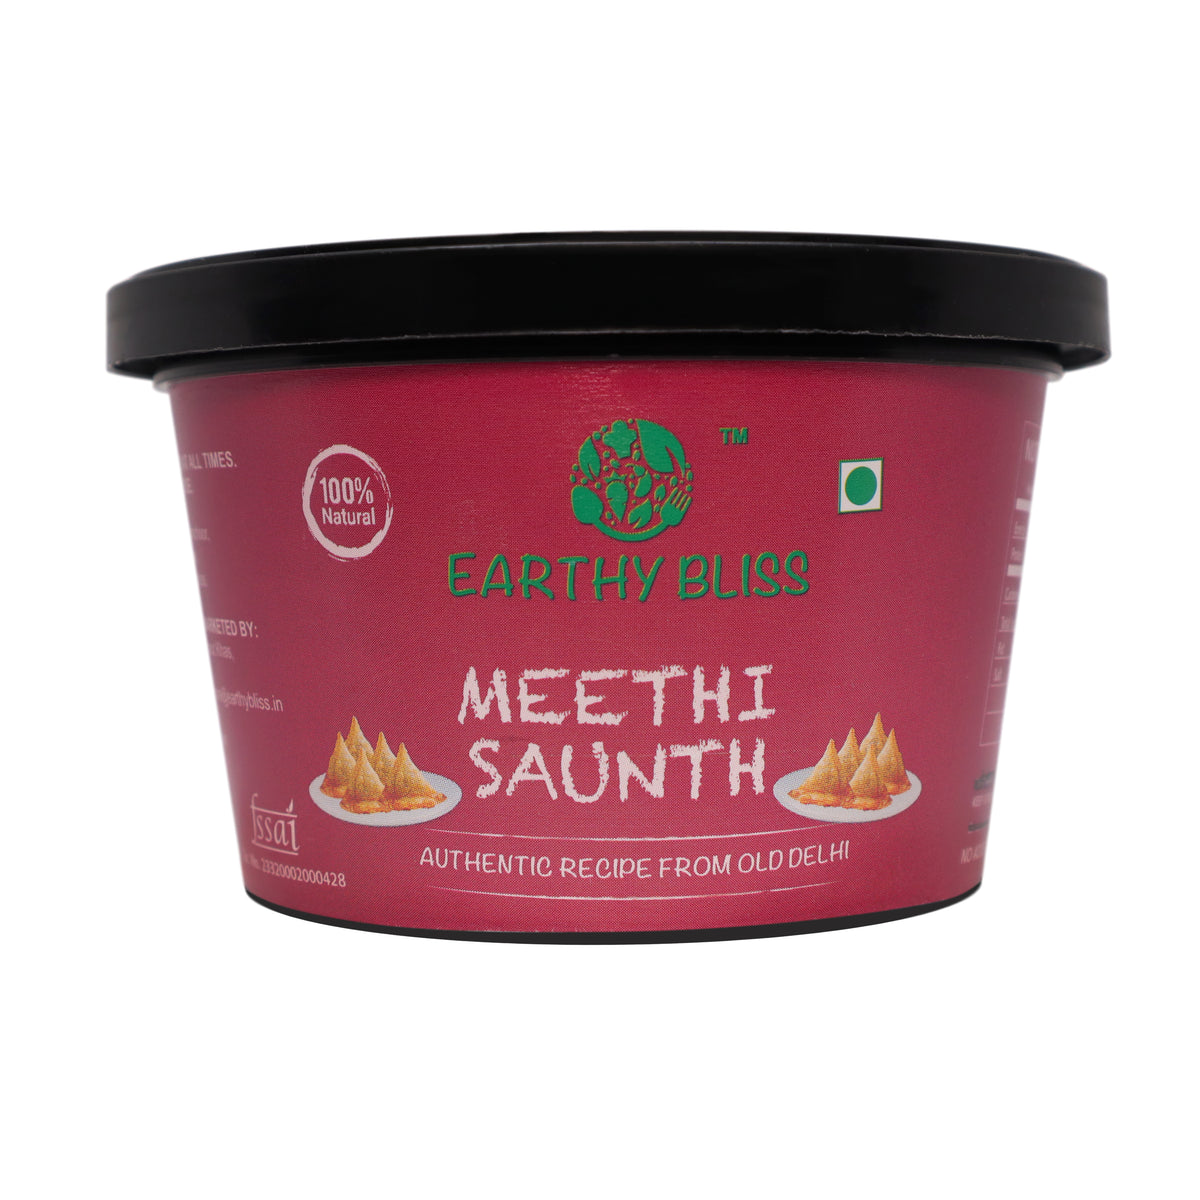 Meethi Saunth - Earthy Bliss